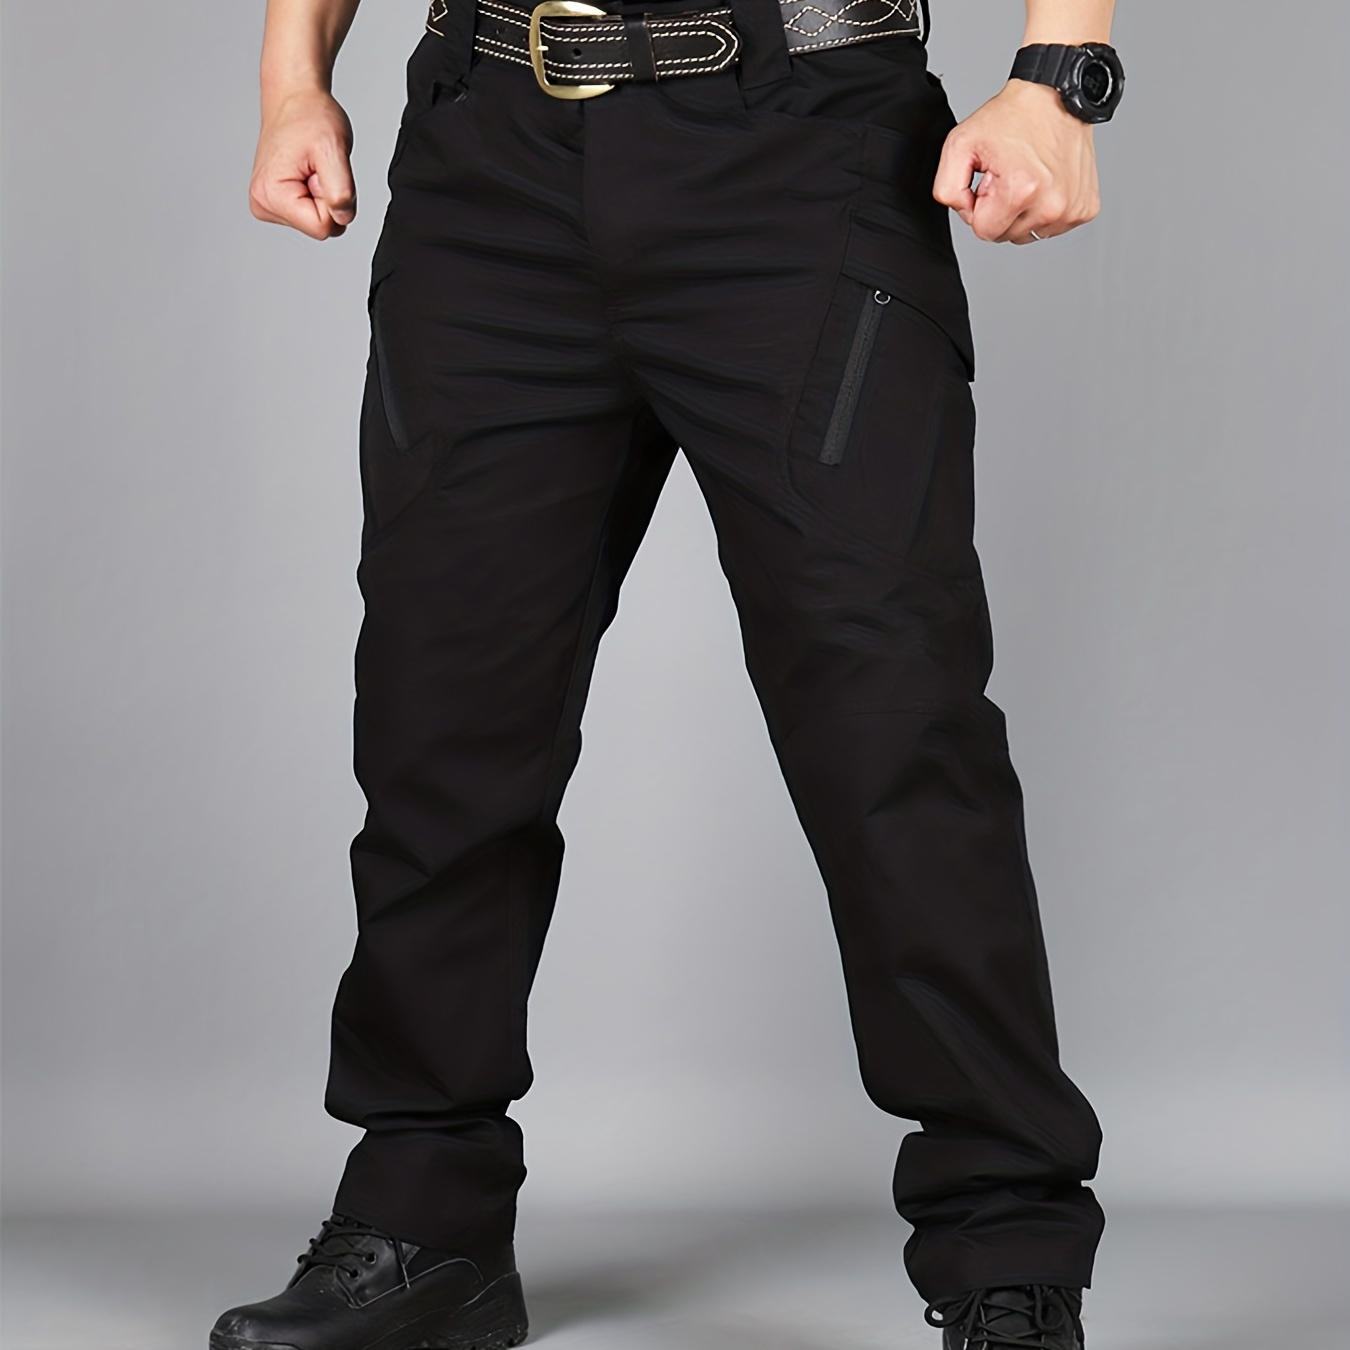 Durable Waterproof Casual Cargo Pants With Zipper Side Pockets Men's ...